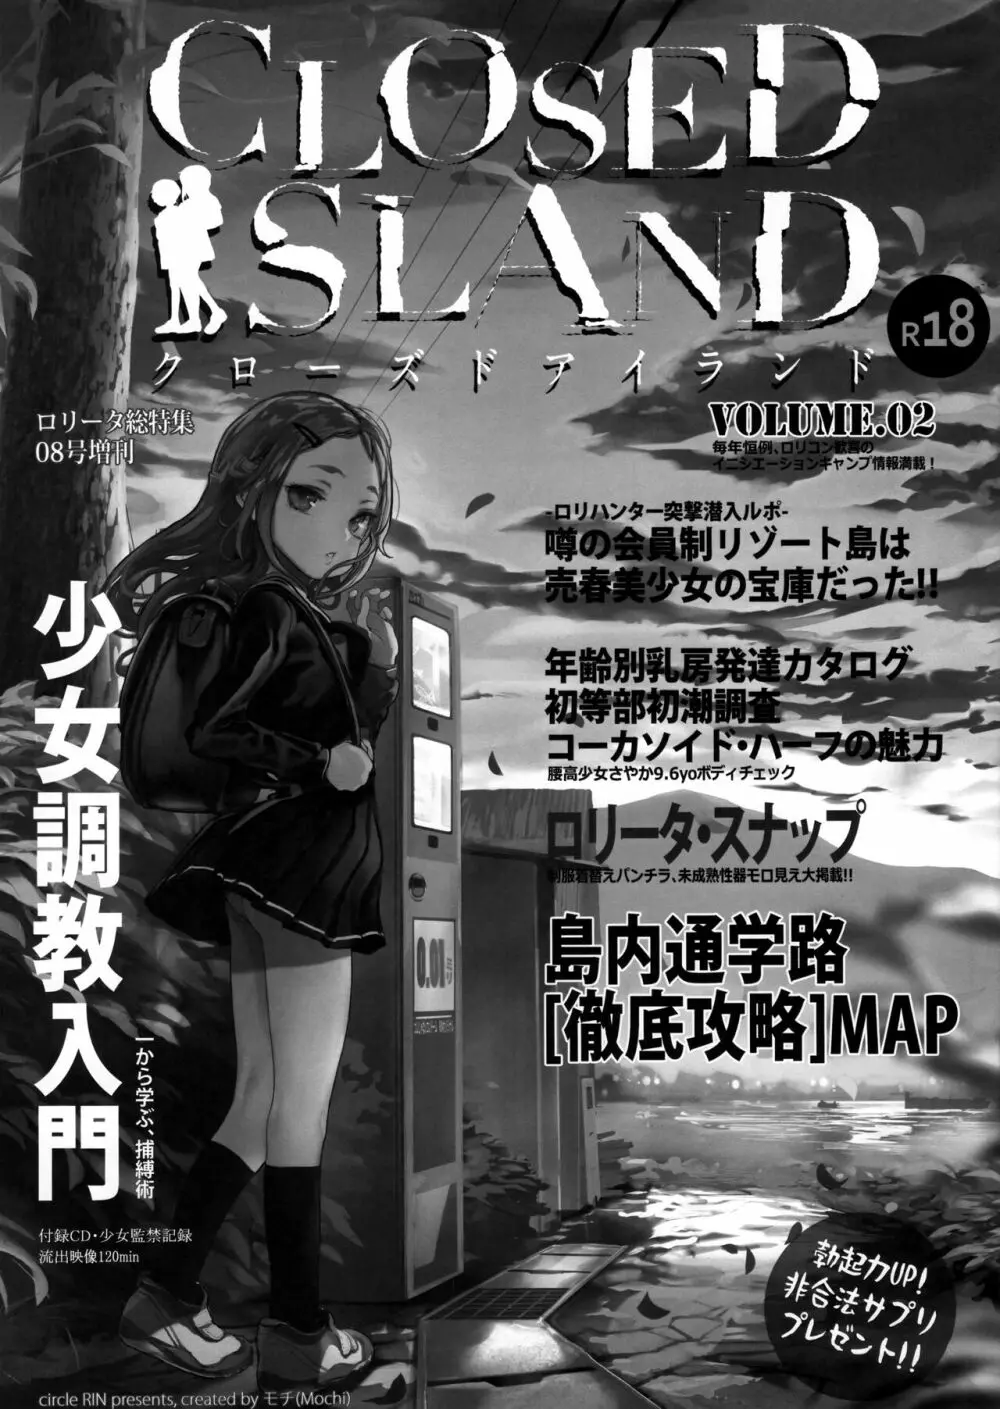 CLOSED ISLAND Volume.2